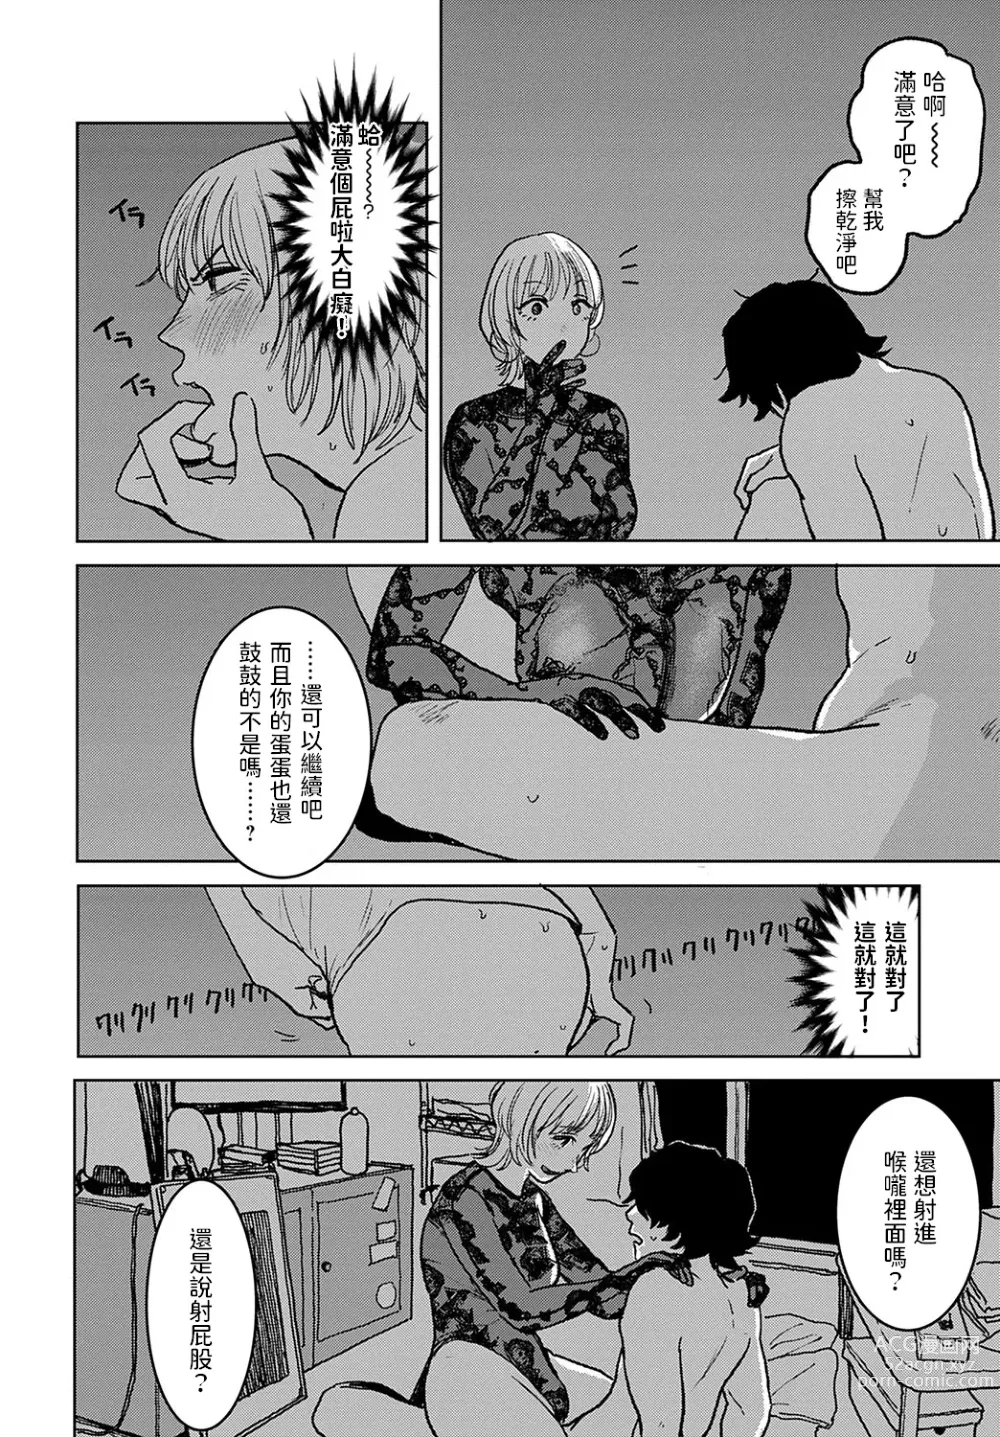 Page 12 of manga better than sex vol. 5